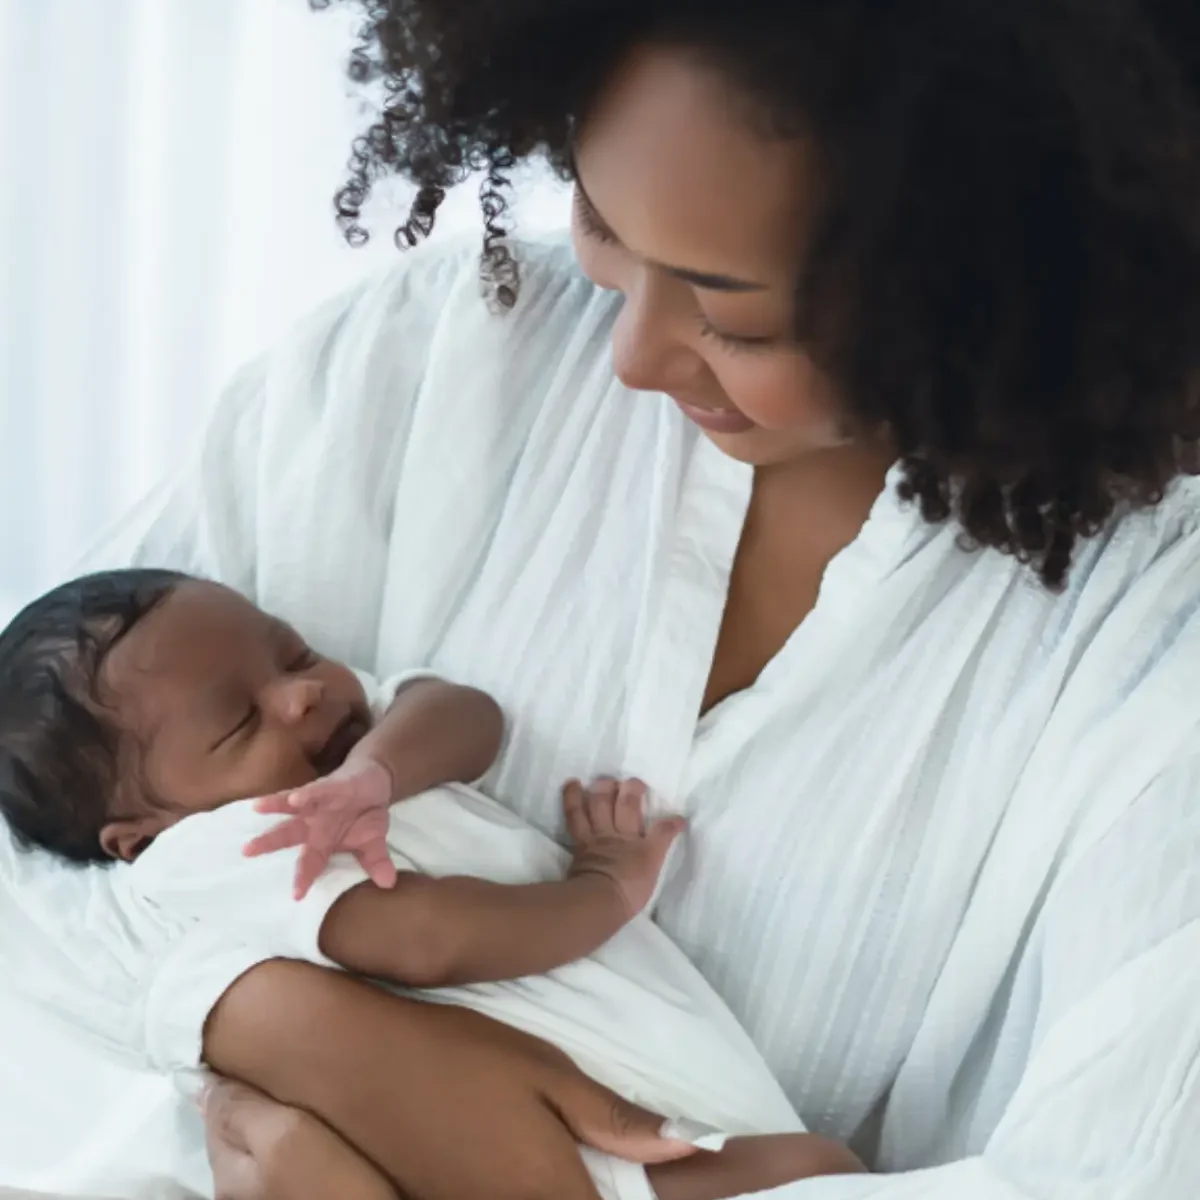 newborn care specialist holding baby